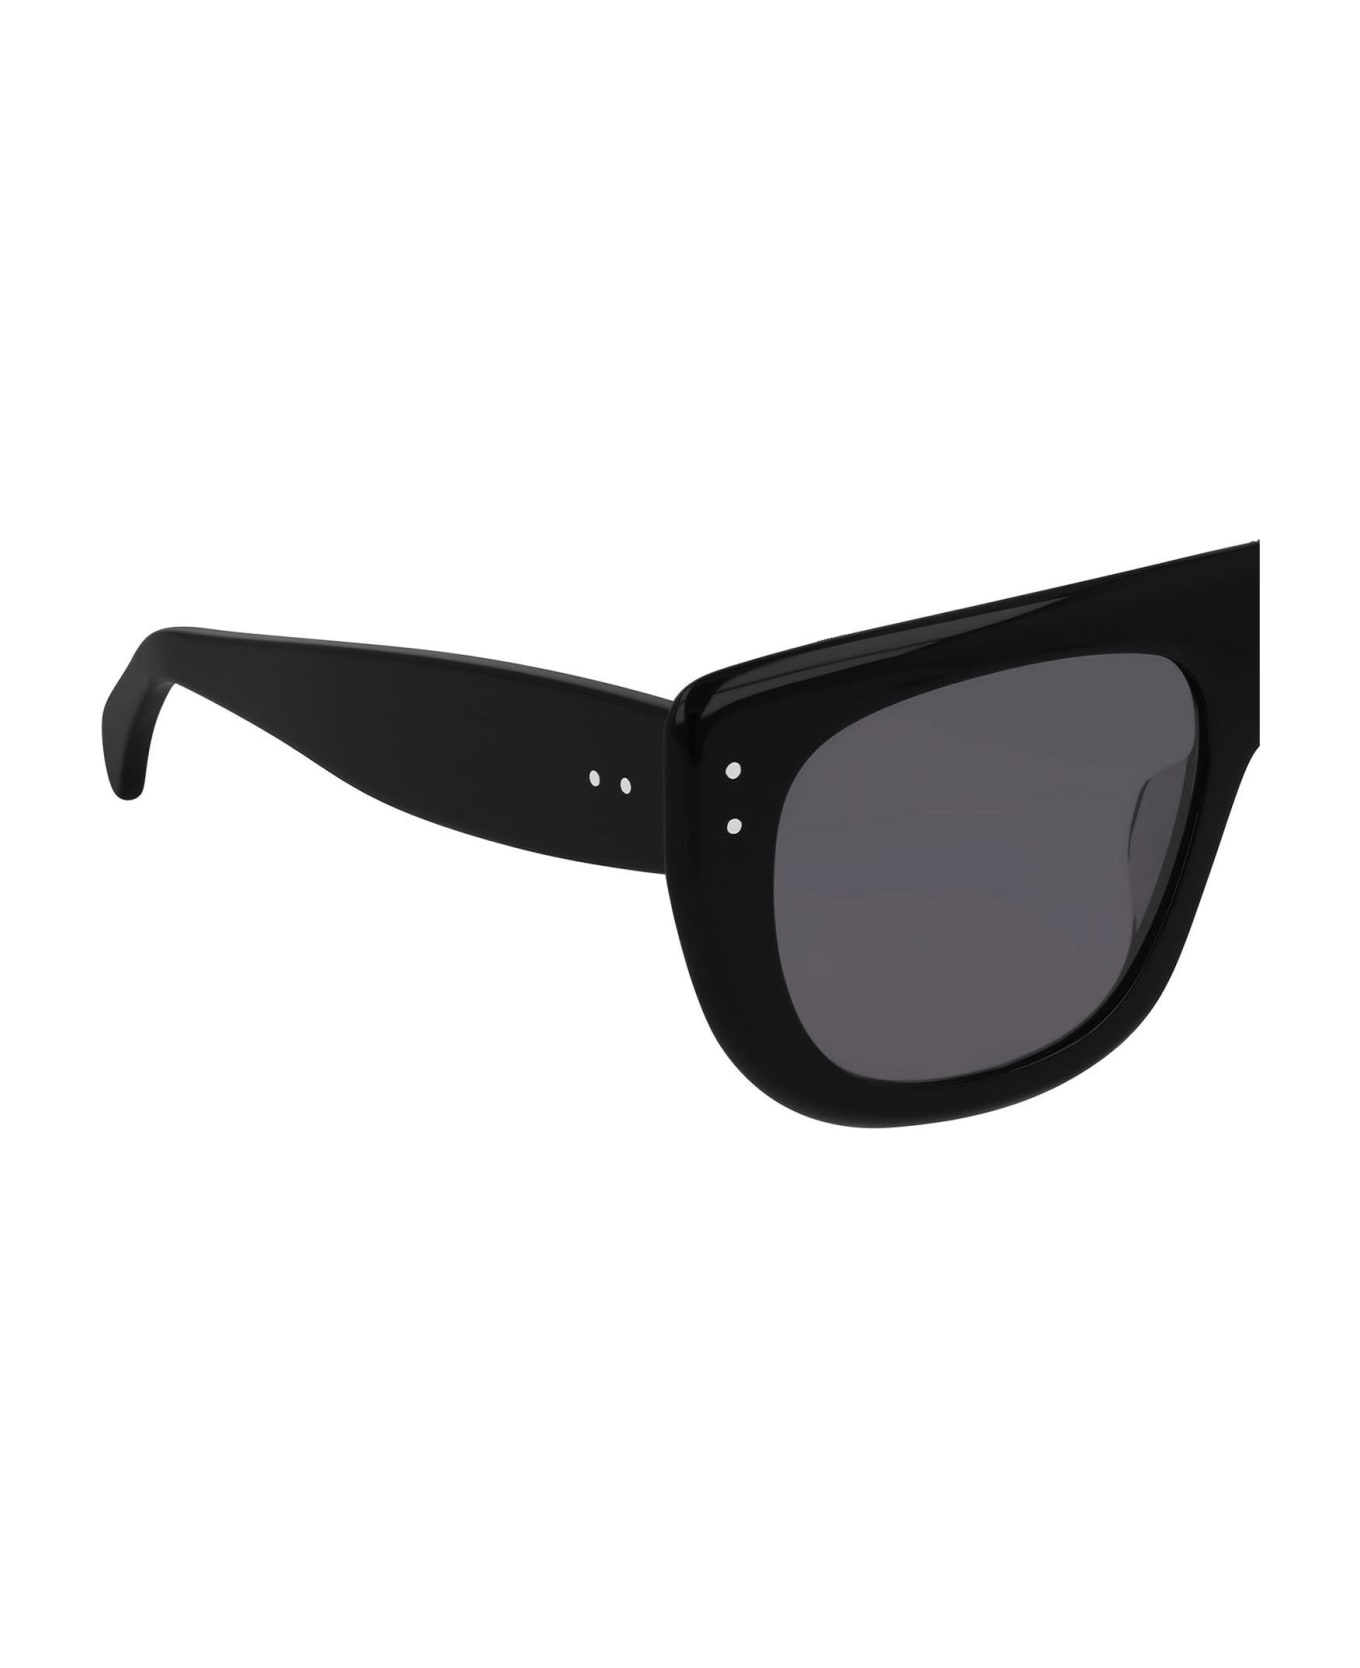 Alaia AA0033S Sunglasses - Black Black Grey サングラス